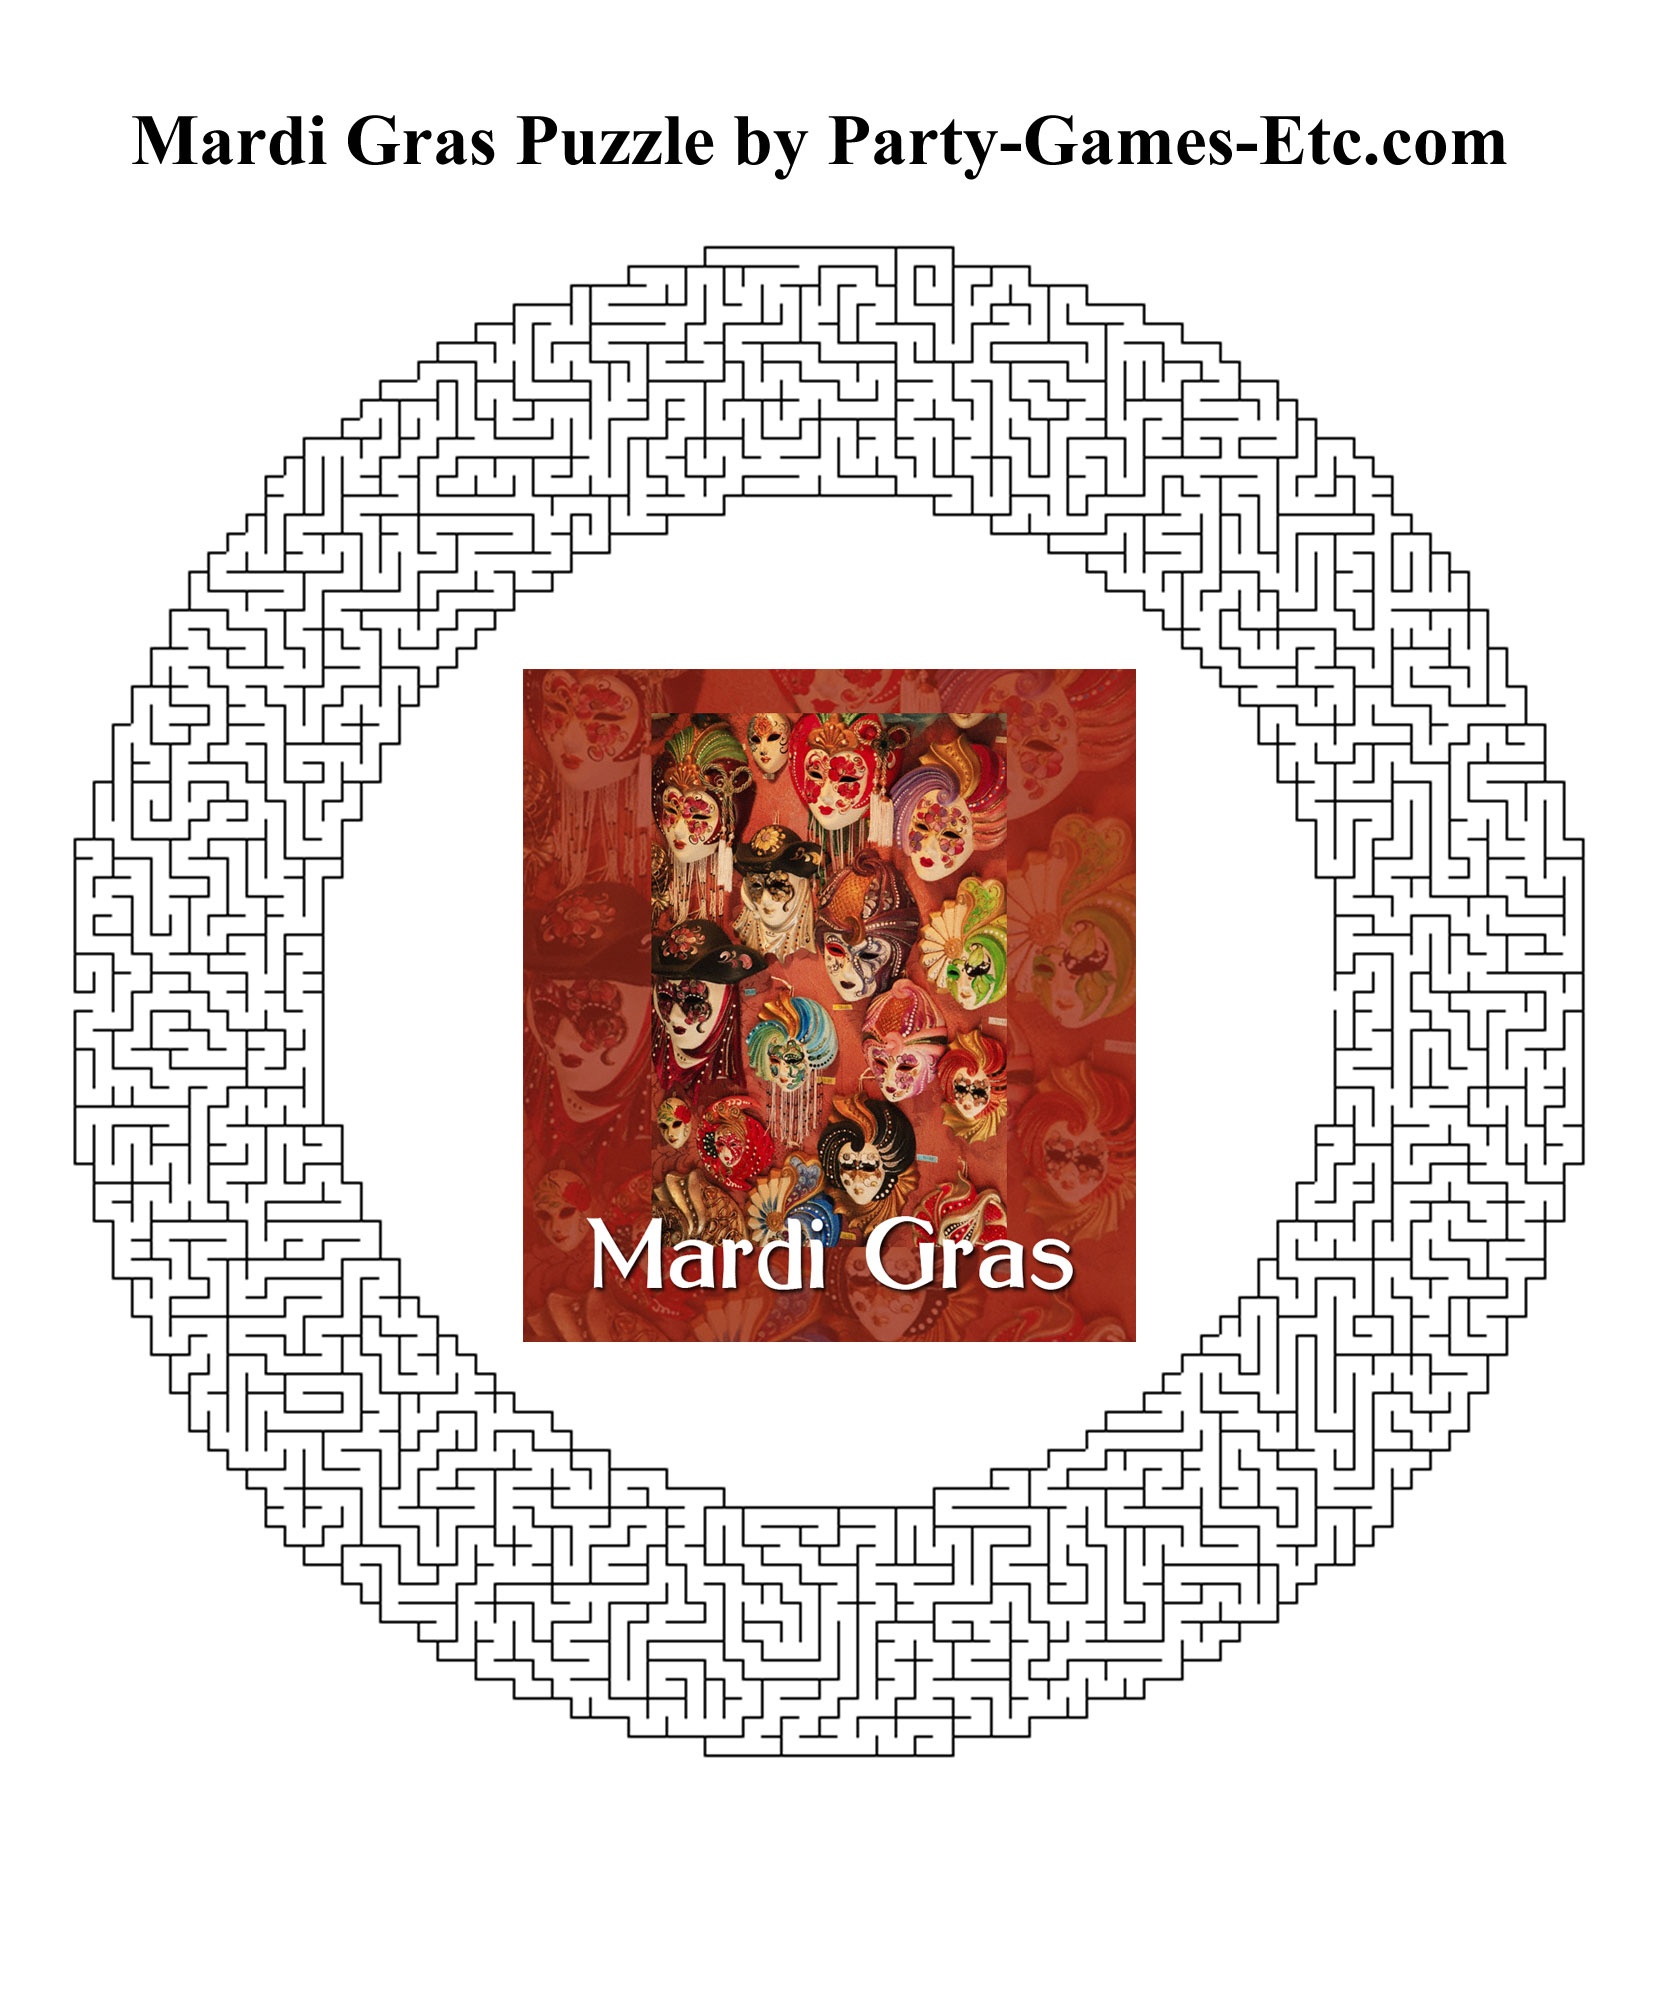 Mardi Gras Party Games, Free Printable Games And Activities For A - Free Printable Mardi Gras Games